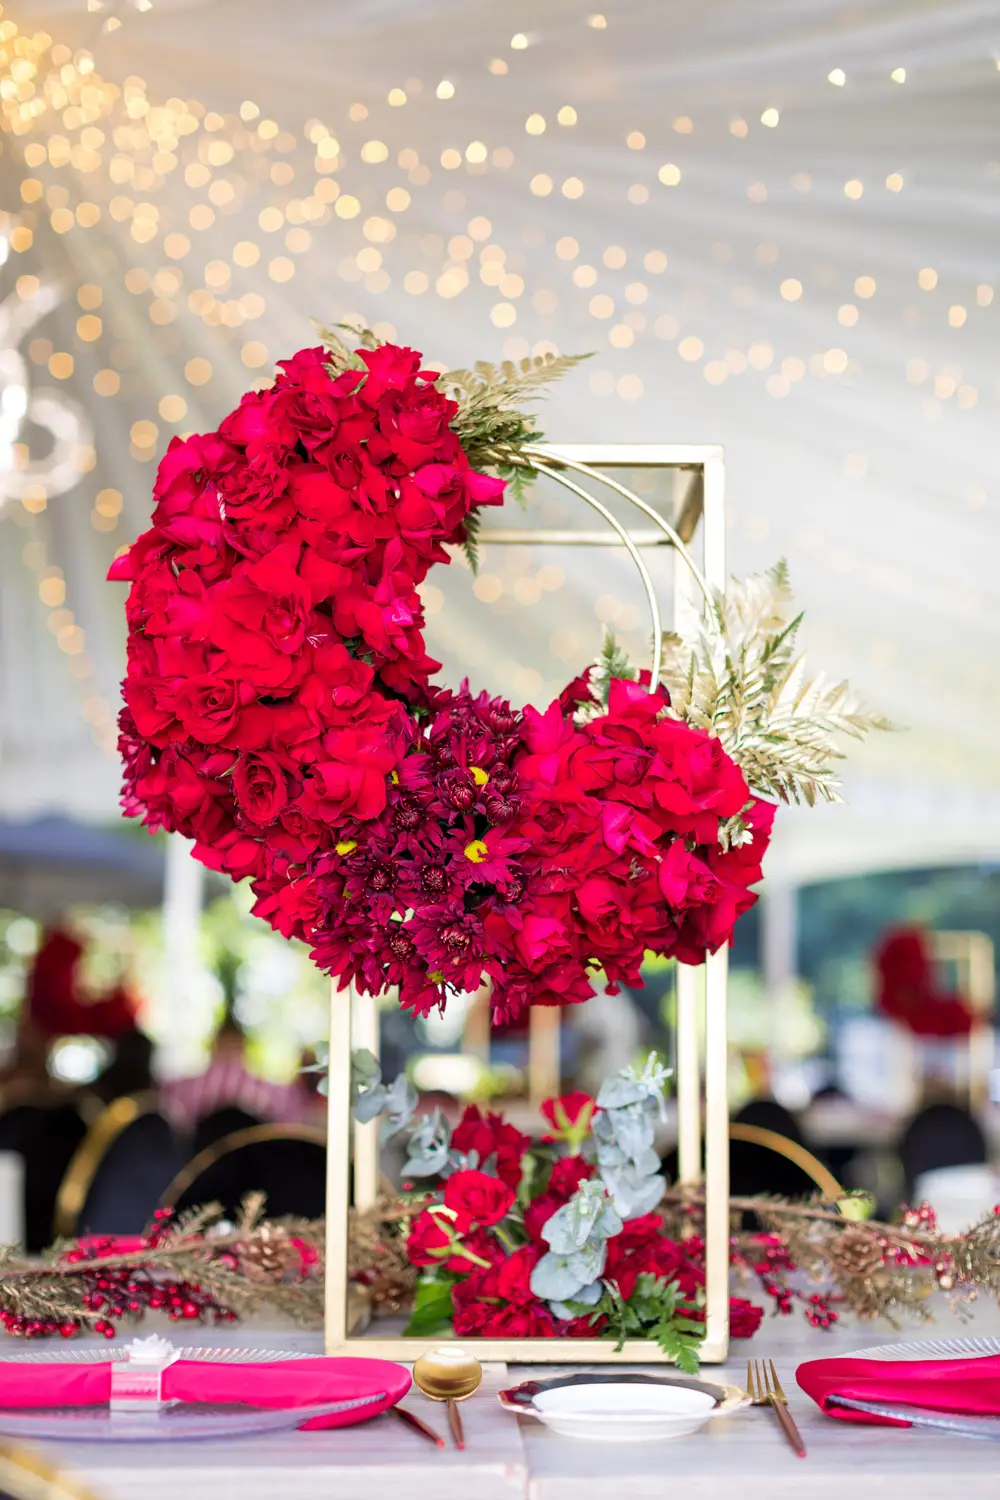 Decorative ornamental red roses